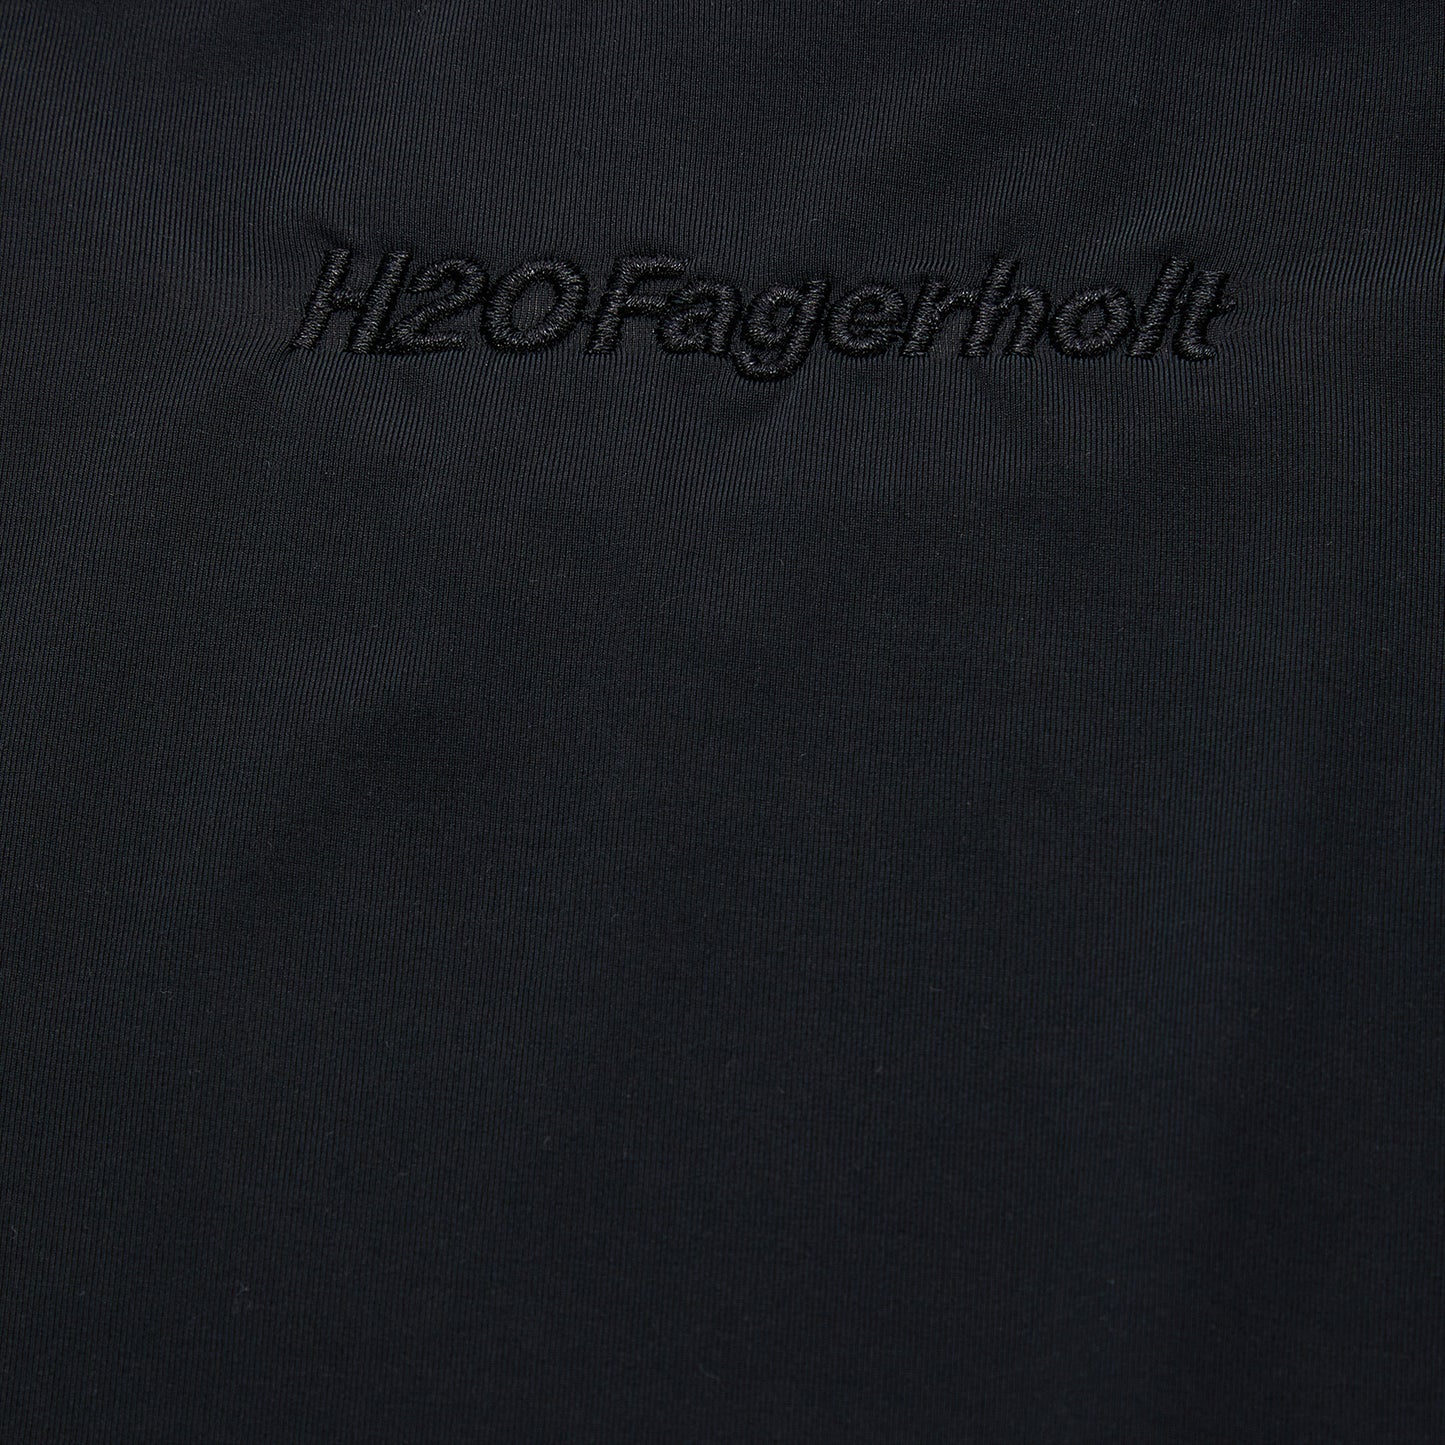 H2OFagerholt Gigi Long Sleeve Body (Deep Black)